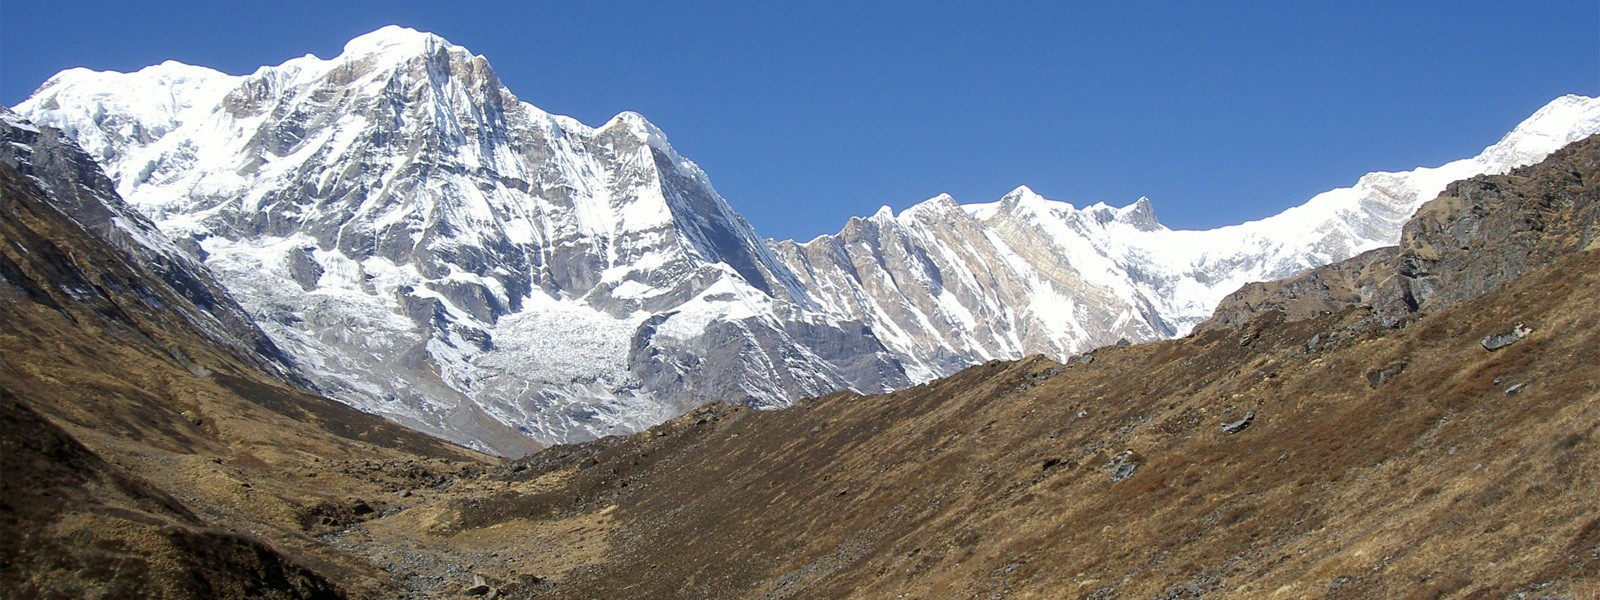 Mt. Annapurna South Expedition in Annapurna Region